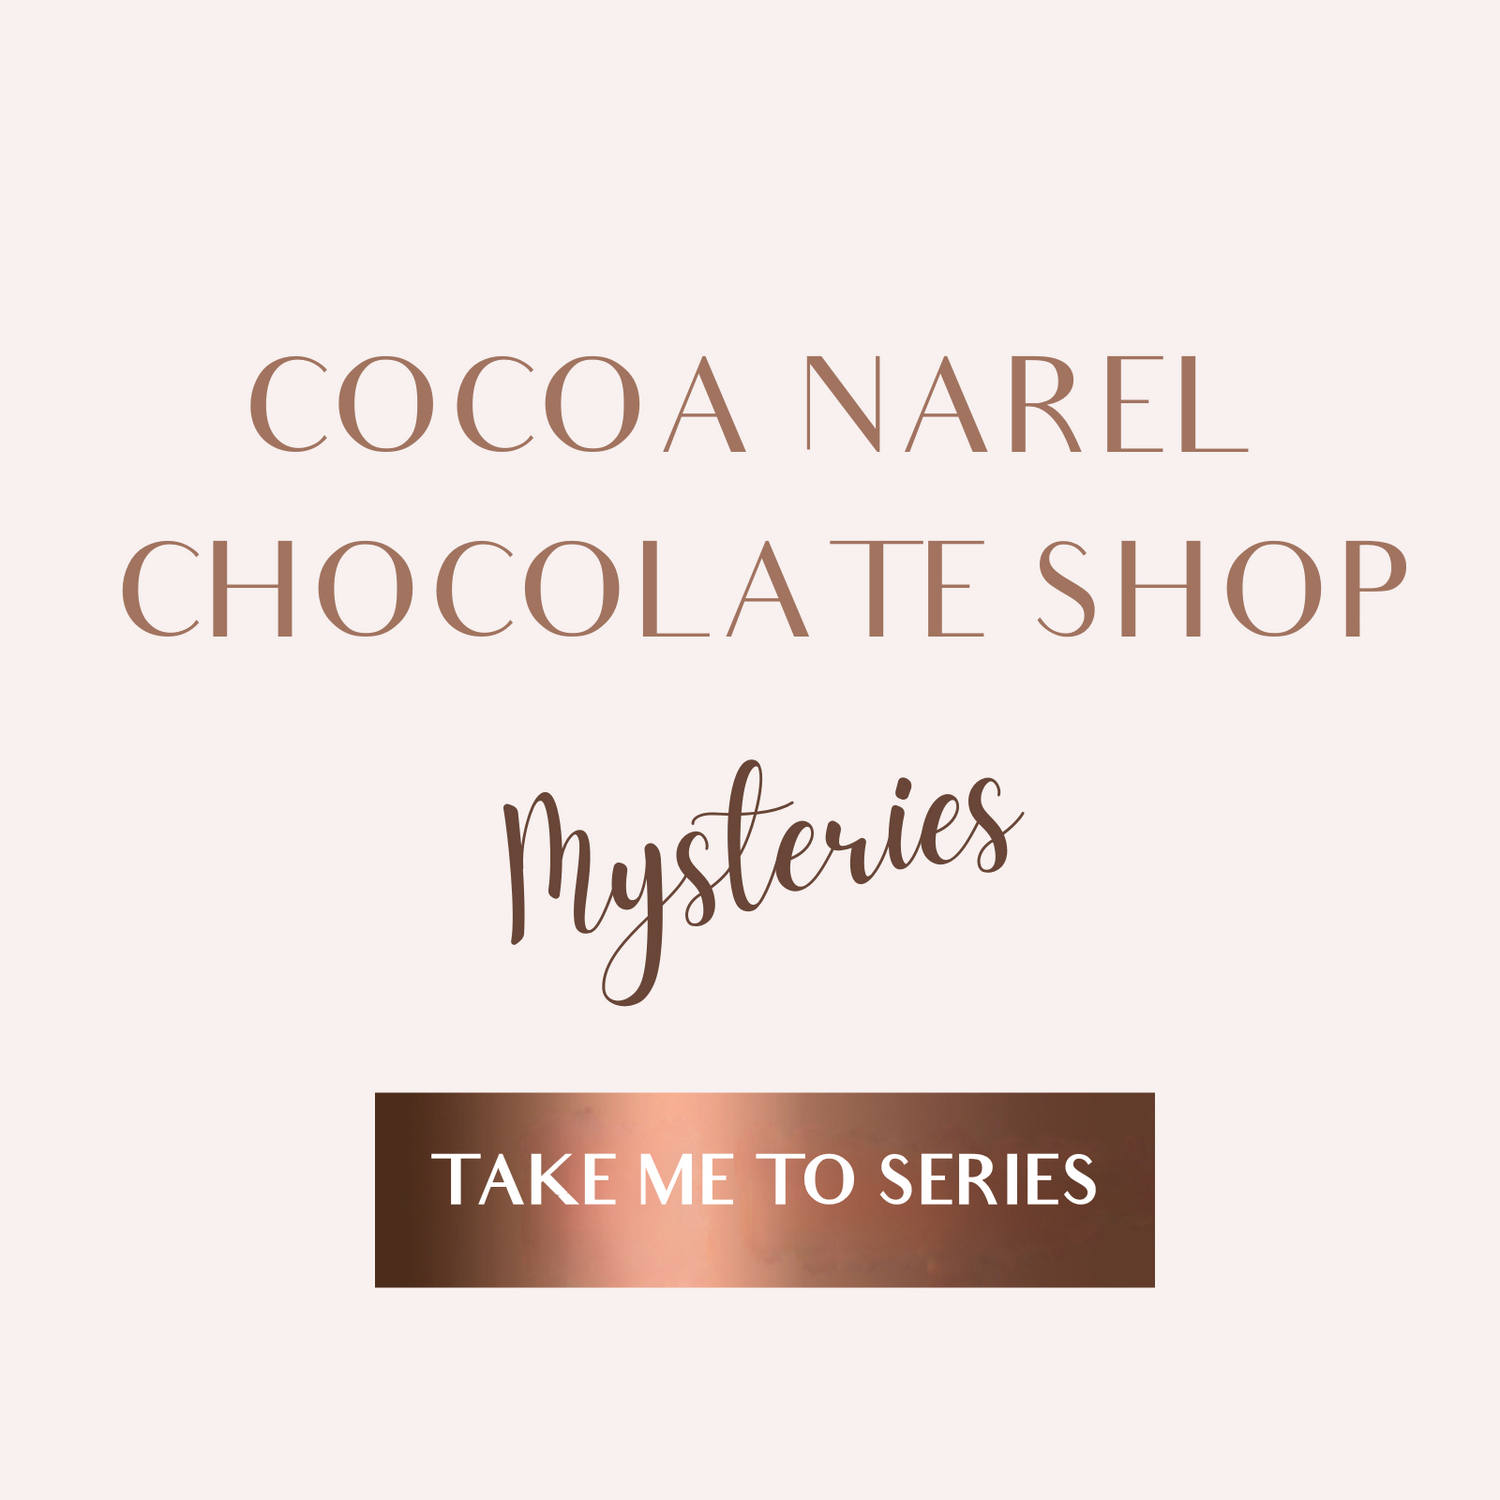 Cocoa Narel Chocolate Shop Mysteries EBOOKS